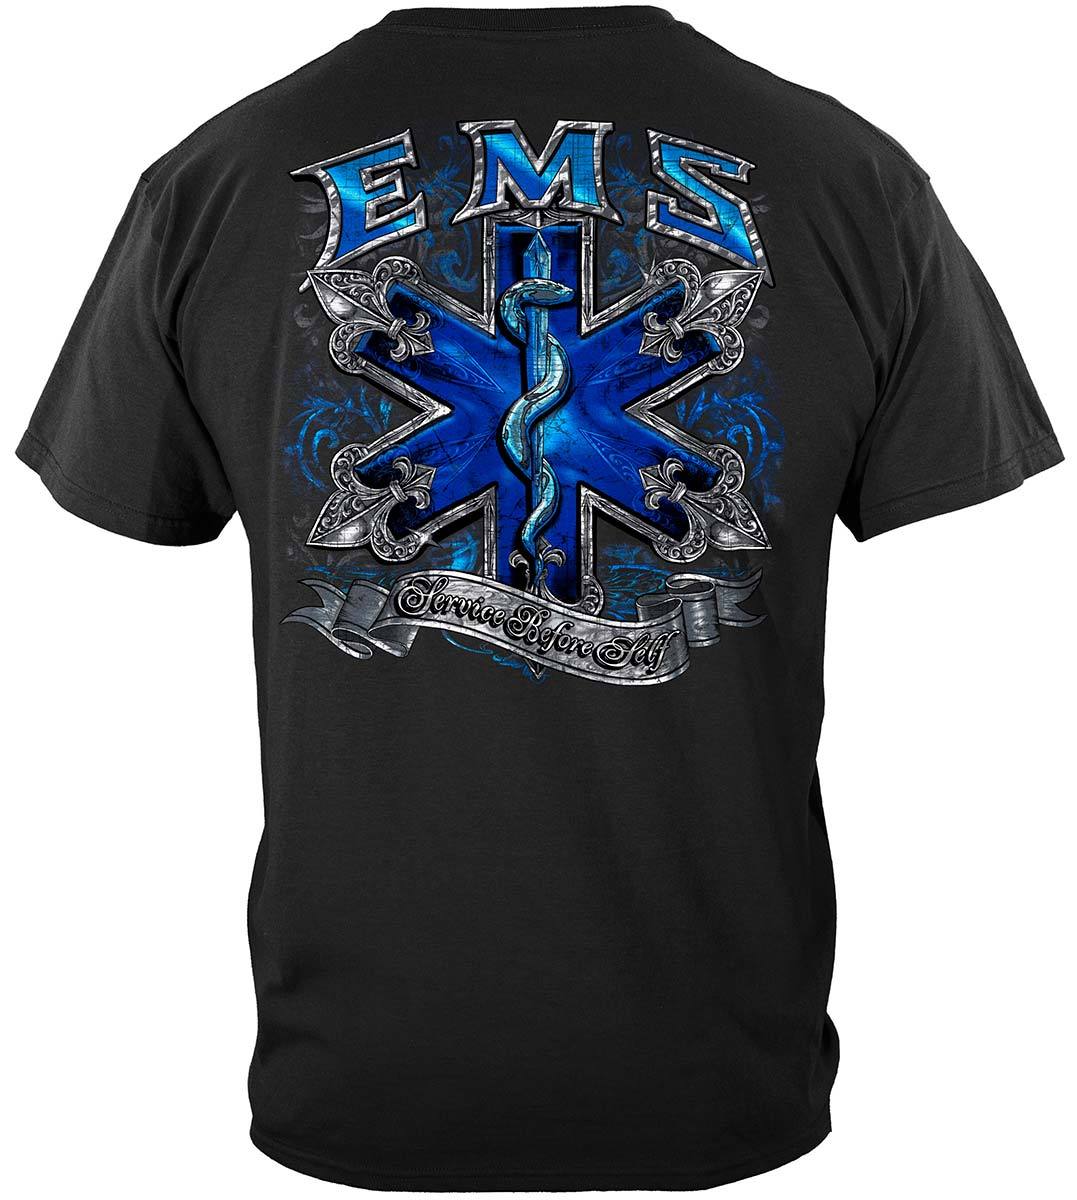 EMS Steel Silver Foil Premium Hooded Sweat Shirt